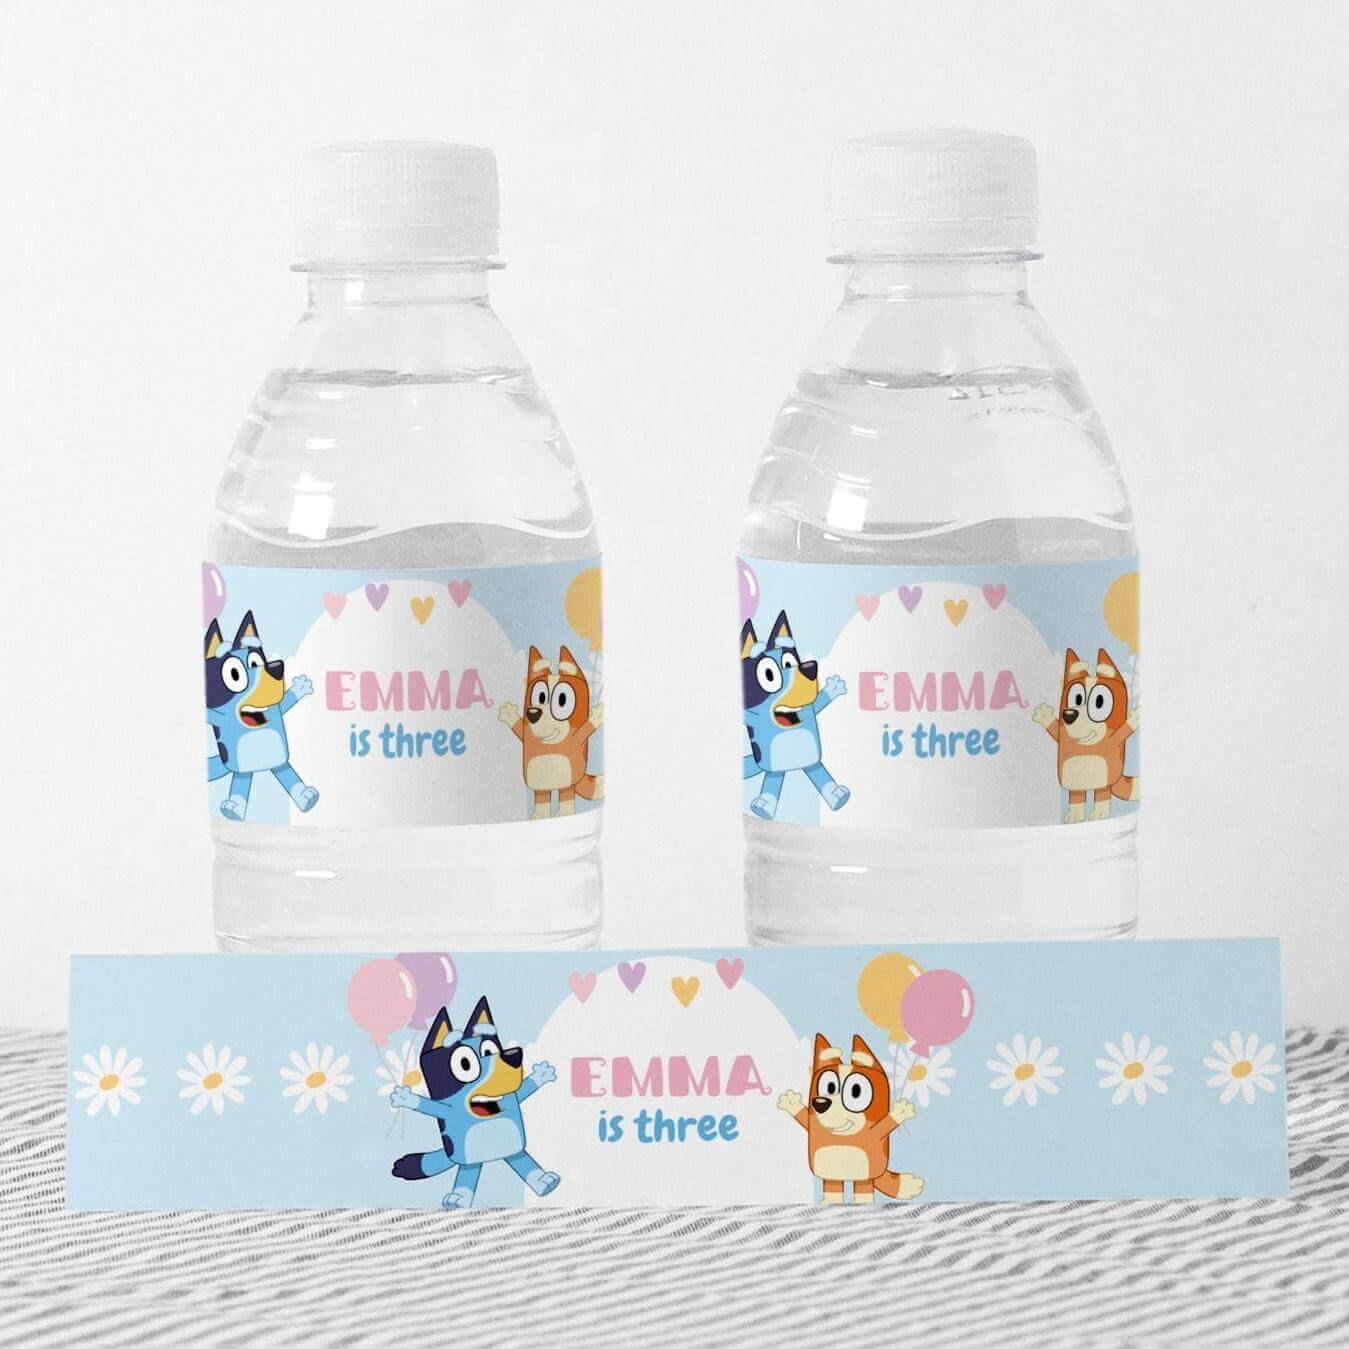 Printable Bluey Water Bottle Labels 